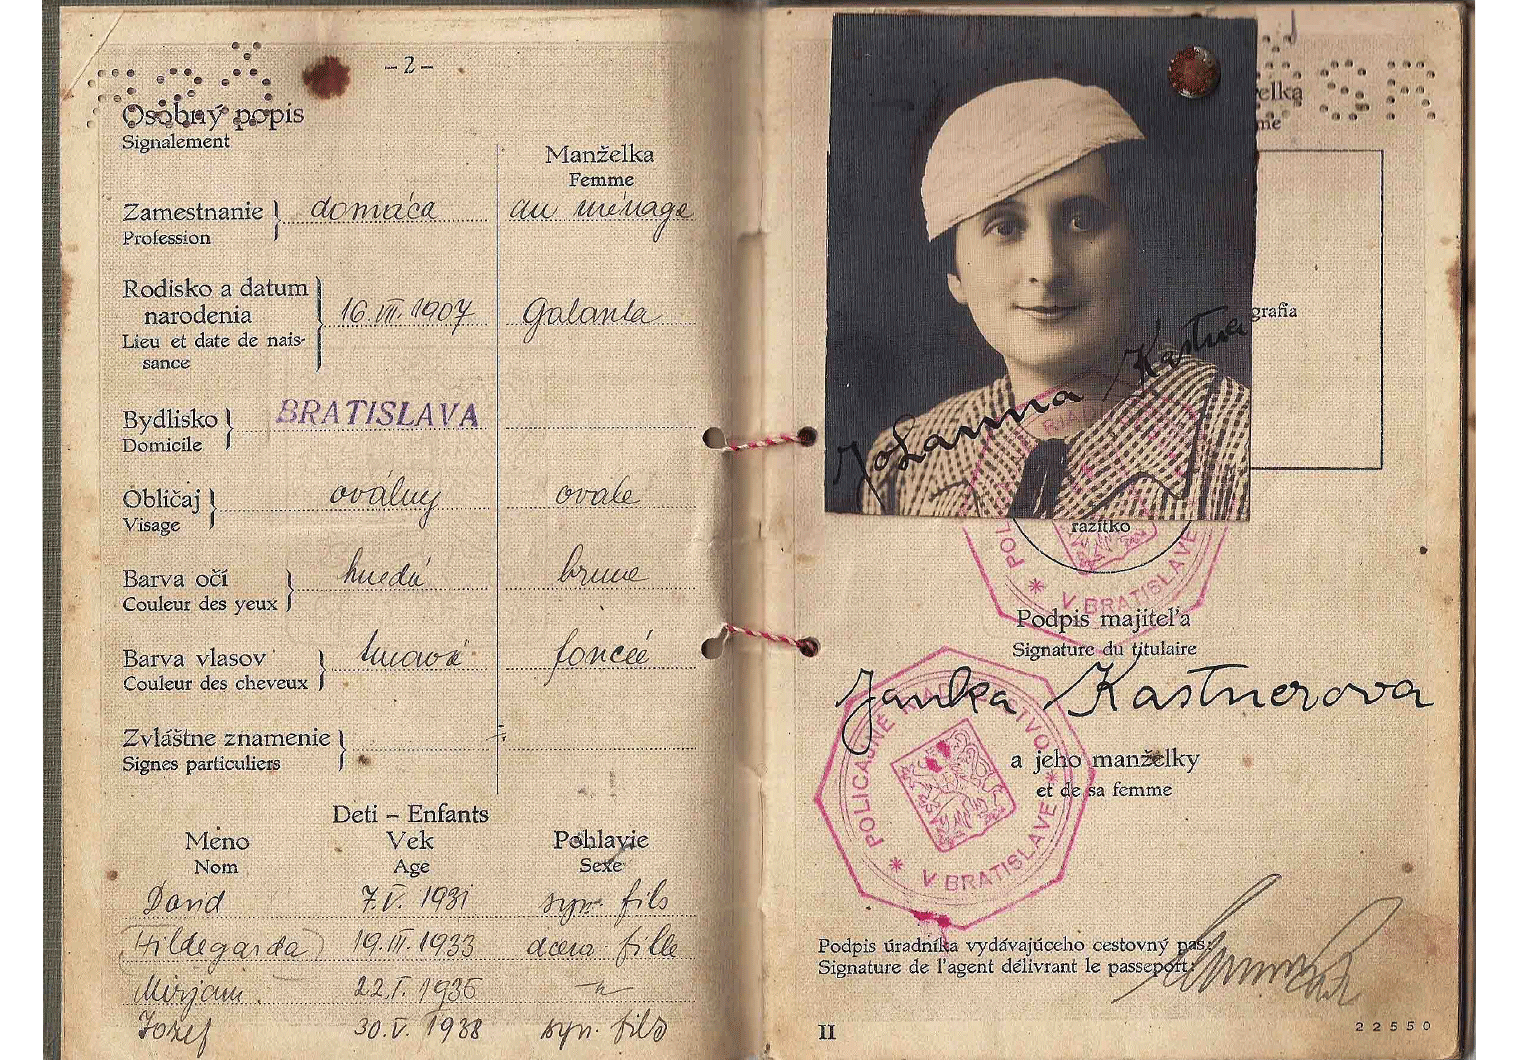 Munich Agreement passport 1938